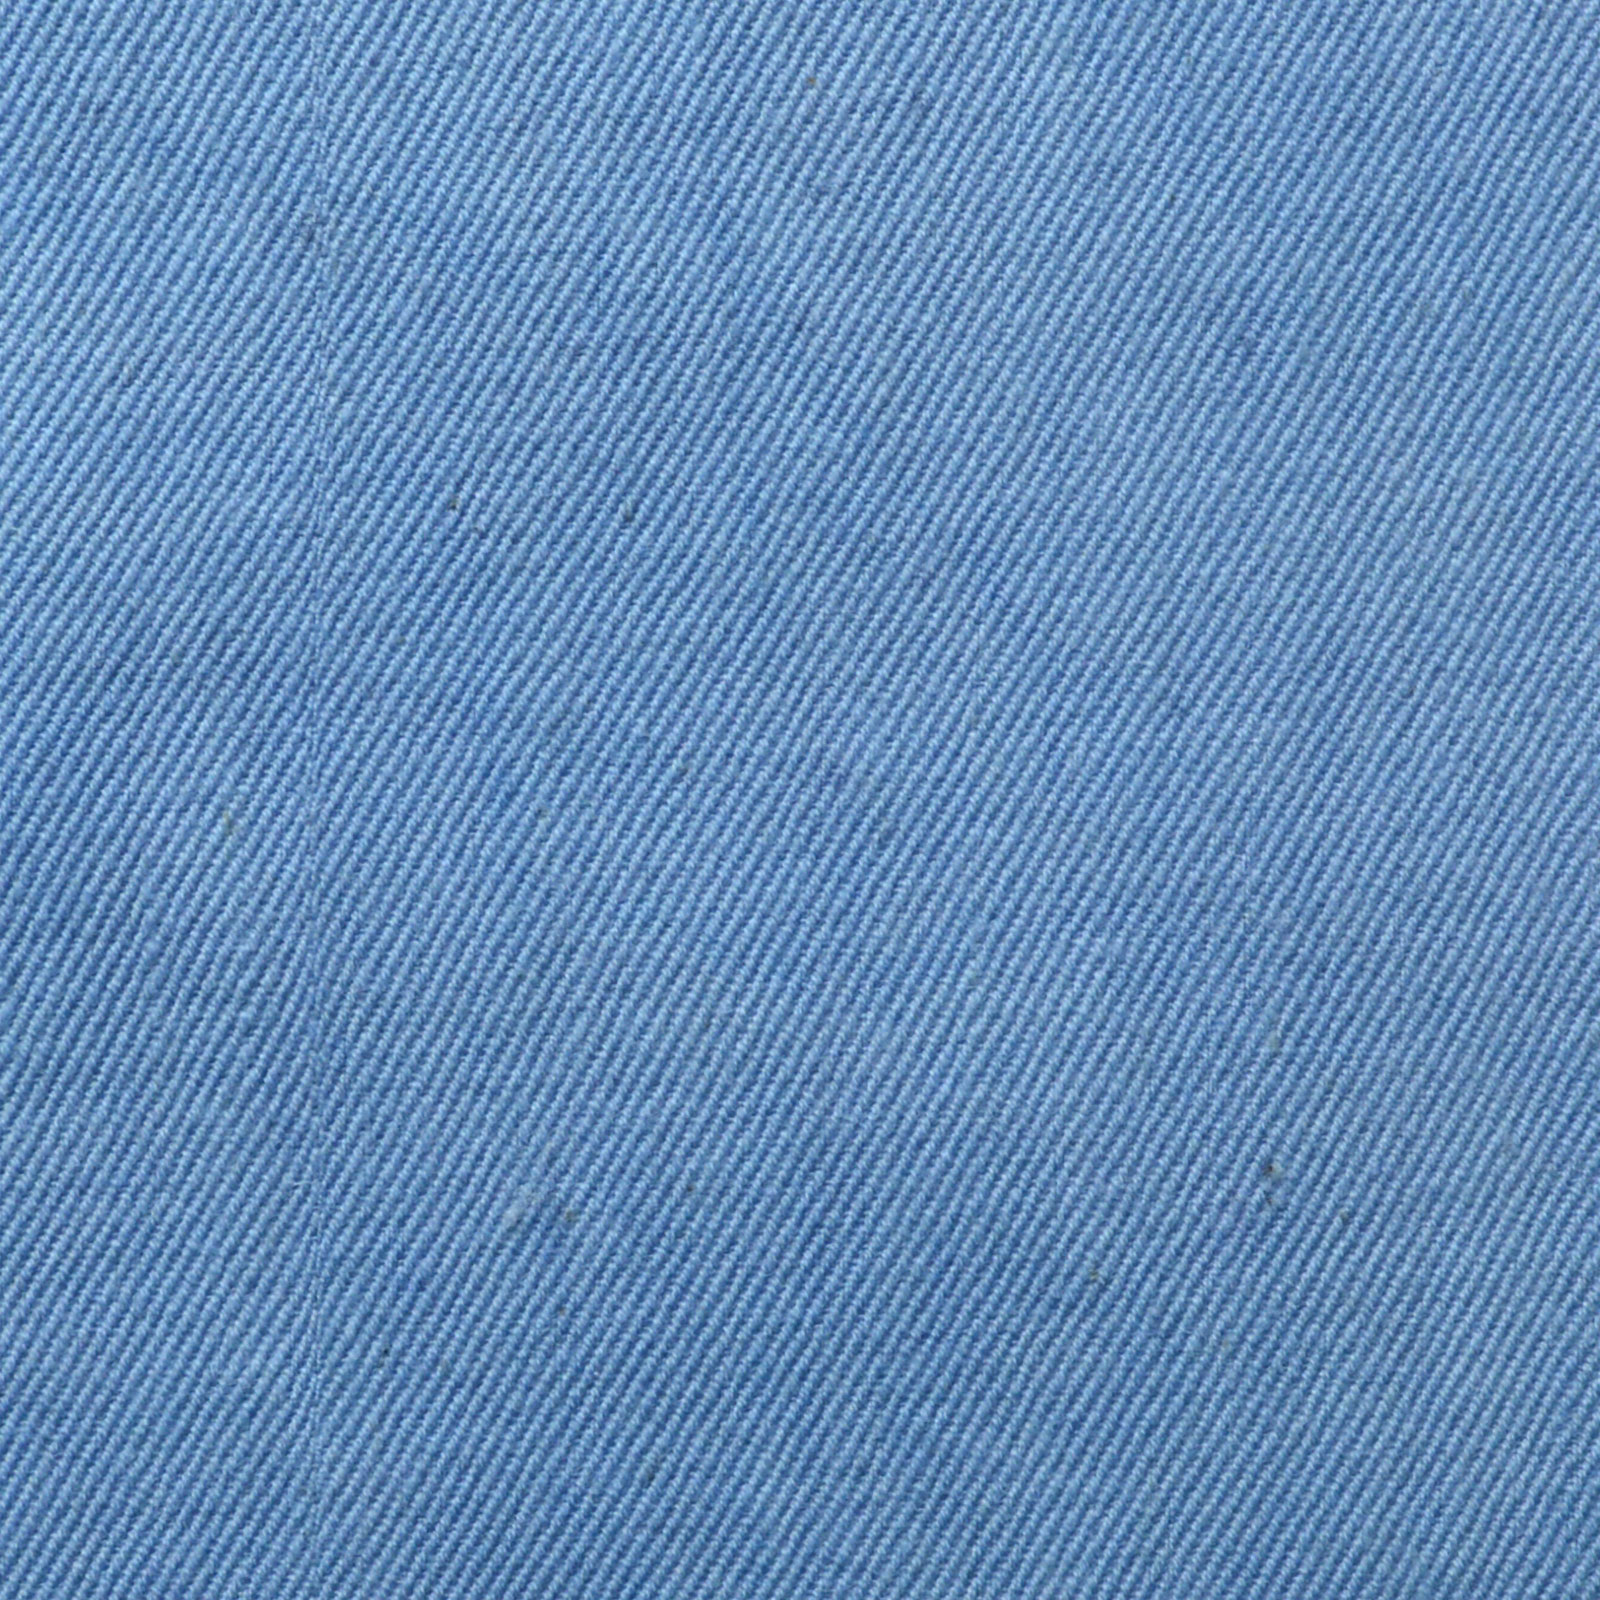 Amazon.com: Denim Fabric 100% Cotton/Indigo Color-6 Oz (Thin & Lightweight)  - Sold by The Yard - 60